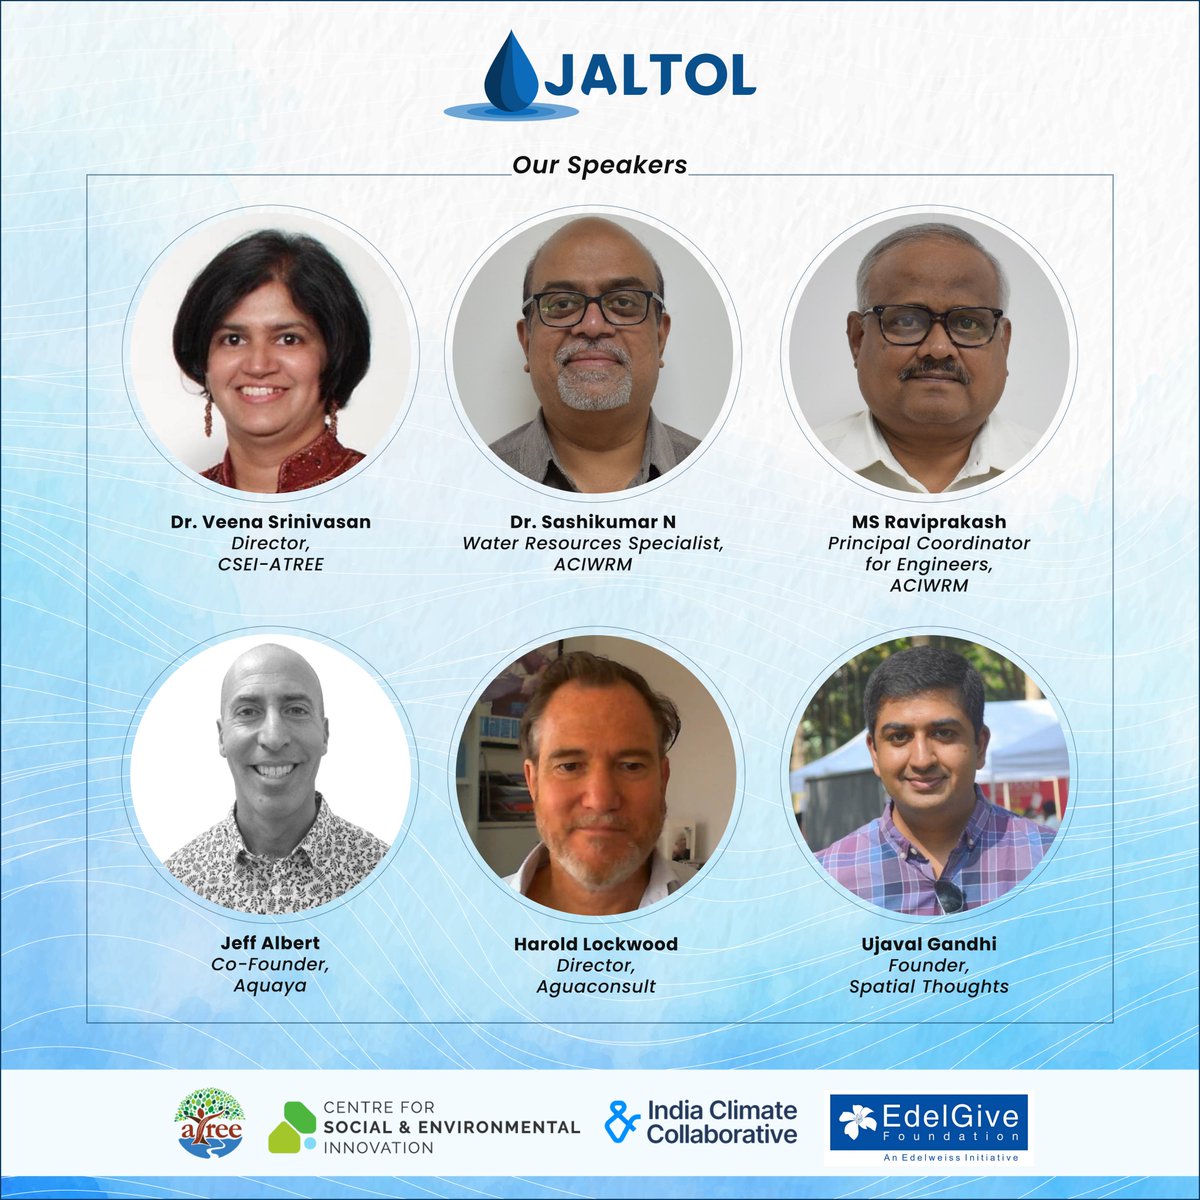 Here's the fantastic lineup of speakers who will be at the #JaltolLaunch: @jeffreyalbert (@Aquaya), @haroldlockwood (@Aguaconsult), Ujaval Gandhi (@spatialthoughts), Dr. Sashikumar N & MS Raviprakash (@ACIWRM_GoK) & @veenas_water. See you at the launch! bit.ly/JaltolRSVP